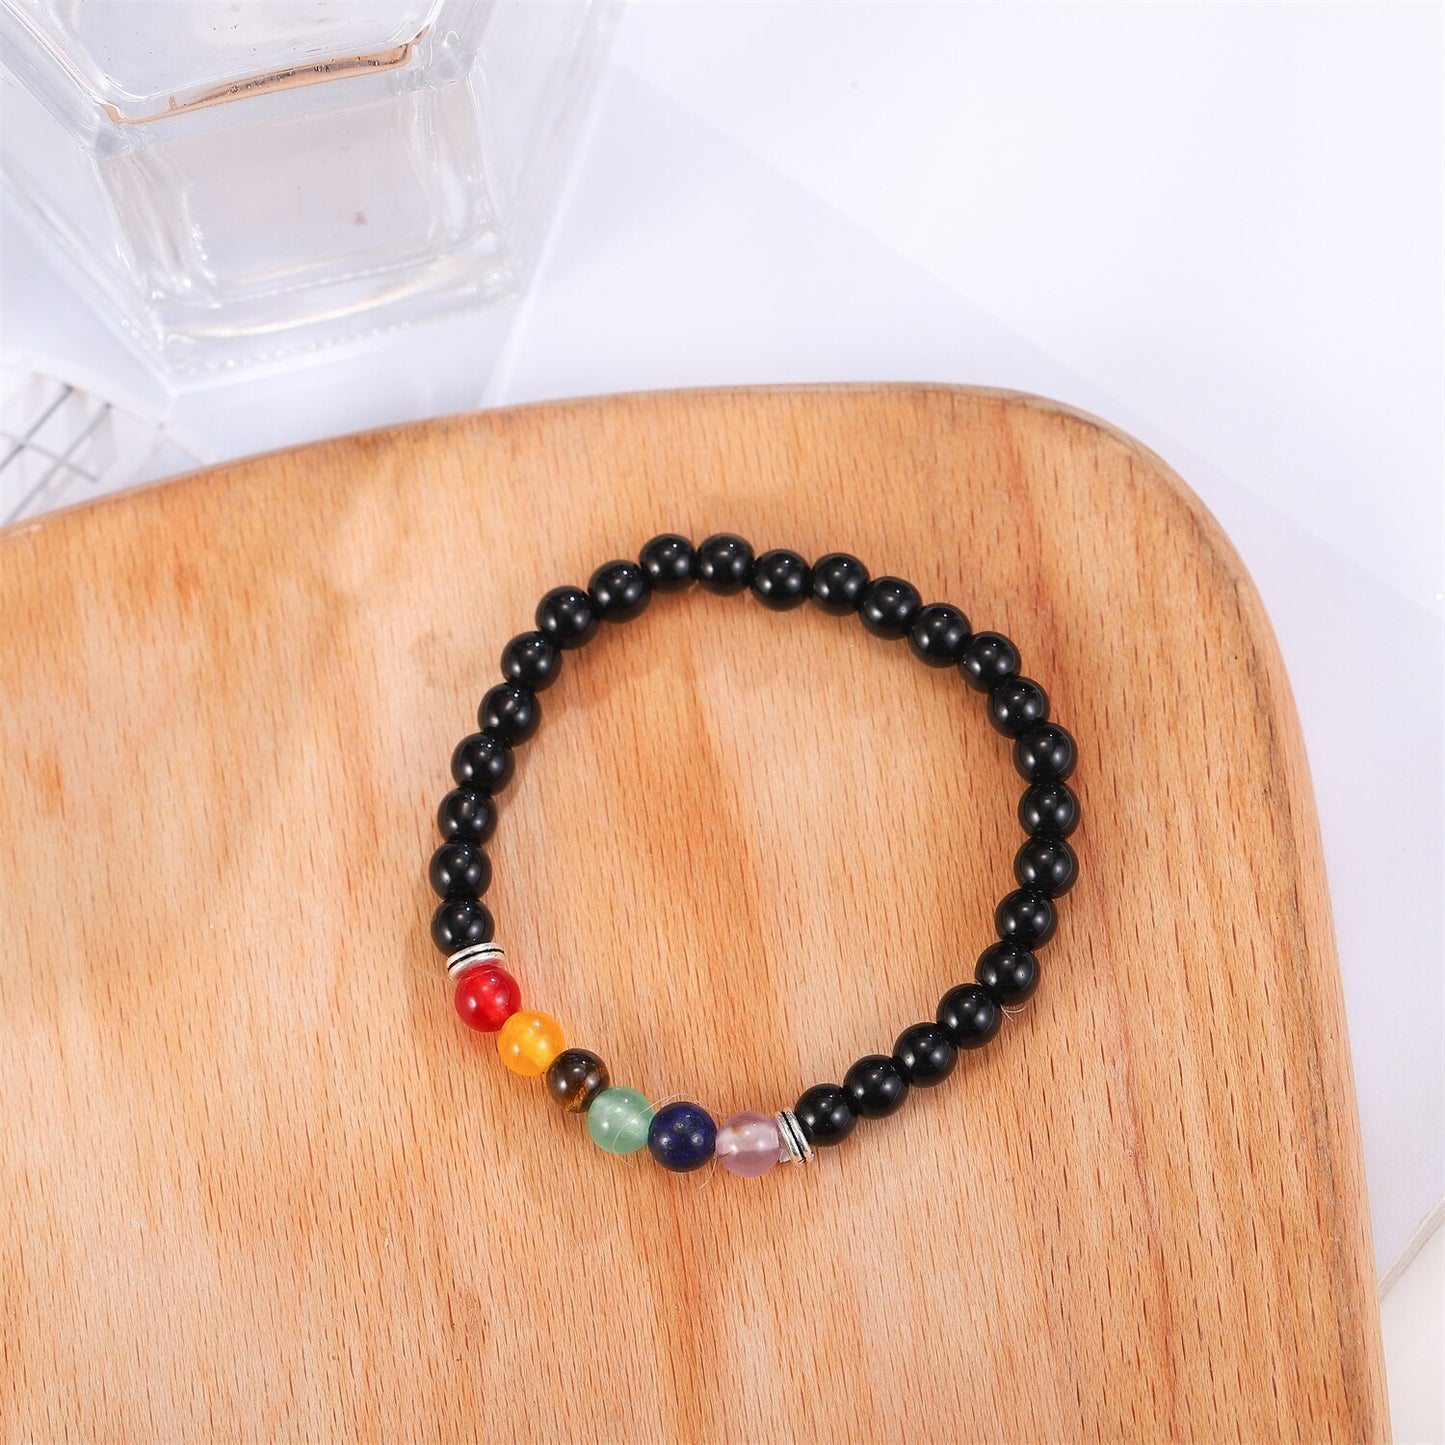 Vintage Shell Natural Stone Bracelet Adjustable Charms Yoga Bracelets Bangle Handmade Braided Rope Bead for Women Jewelry Gift